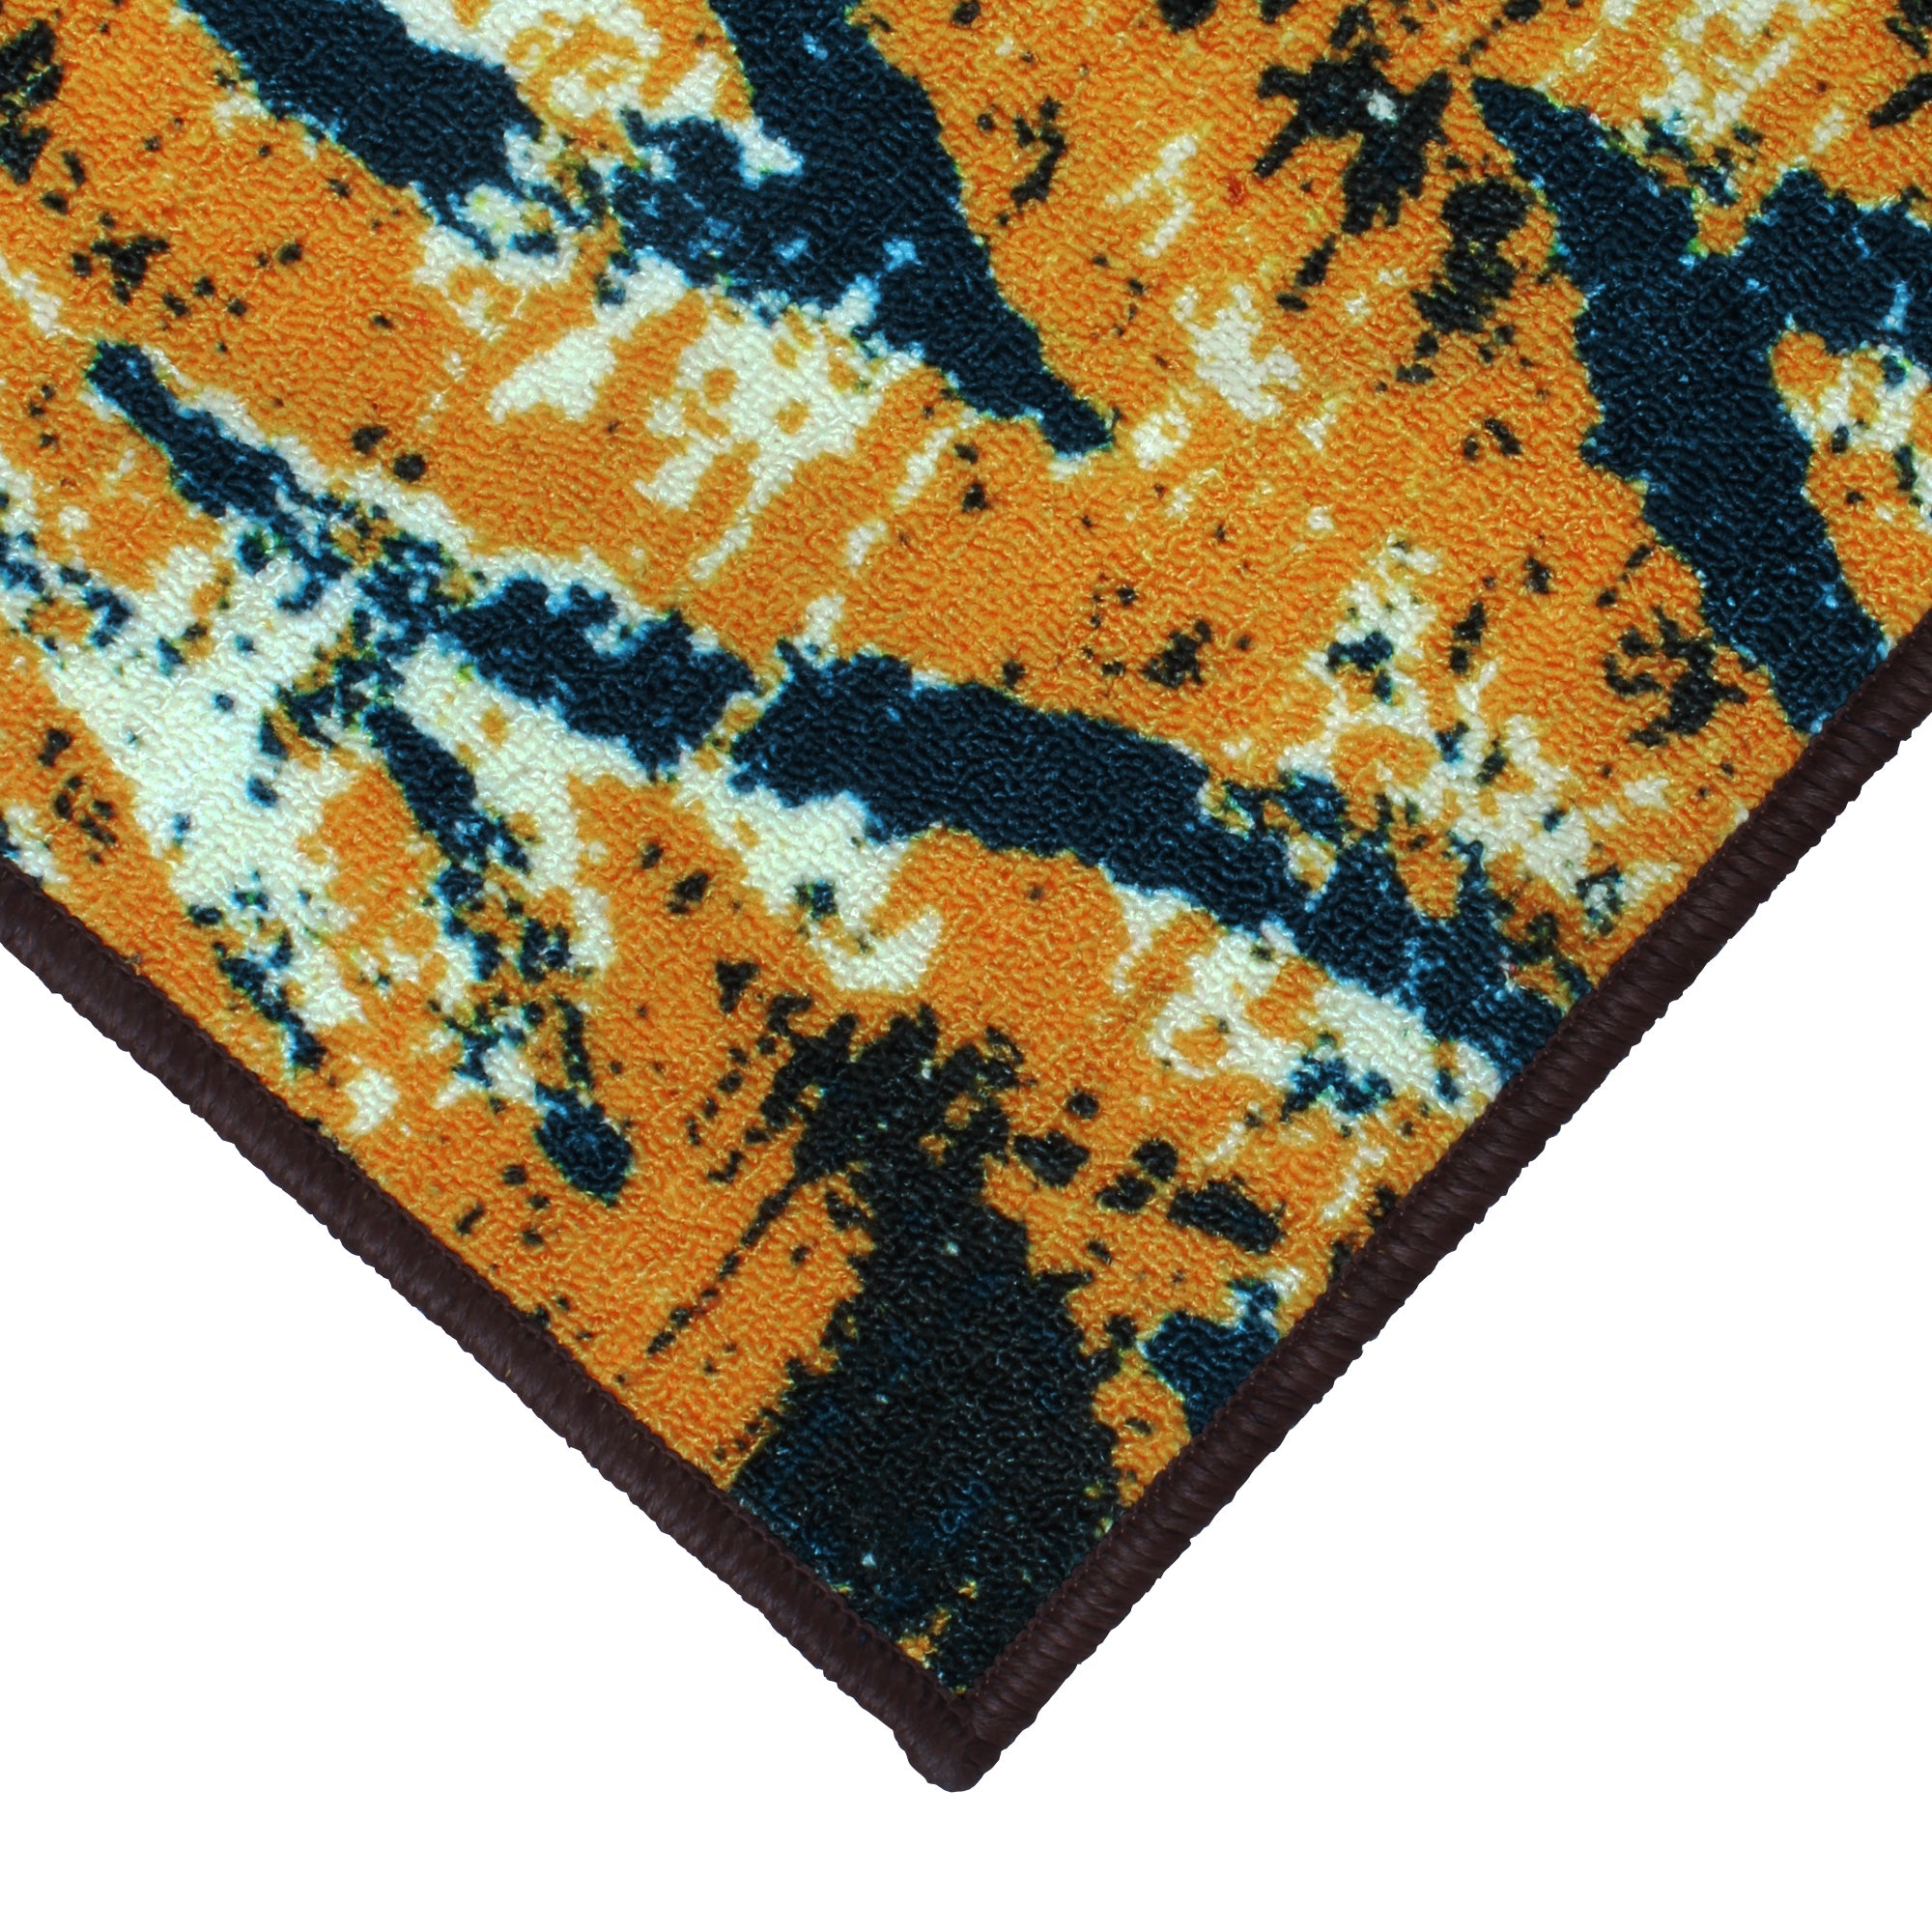 Ethnic Grunge Pattern Yellow & Blue Rustico Rug/Carpet